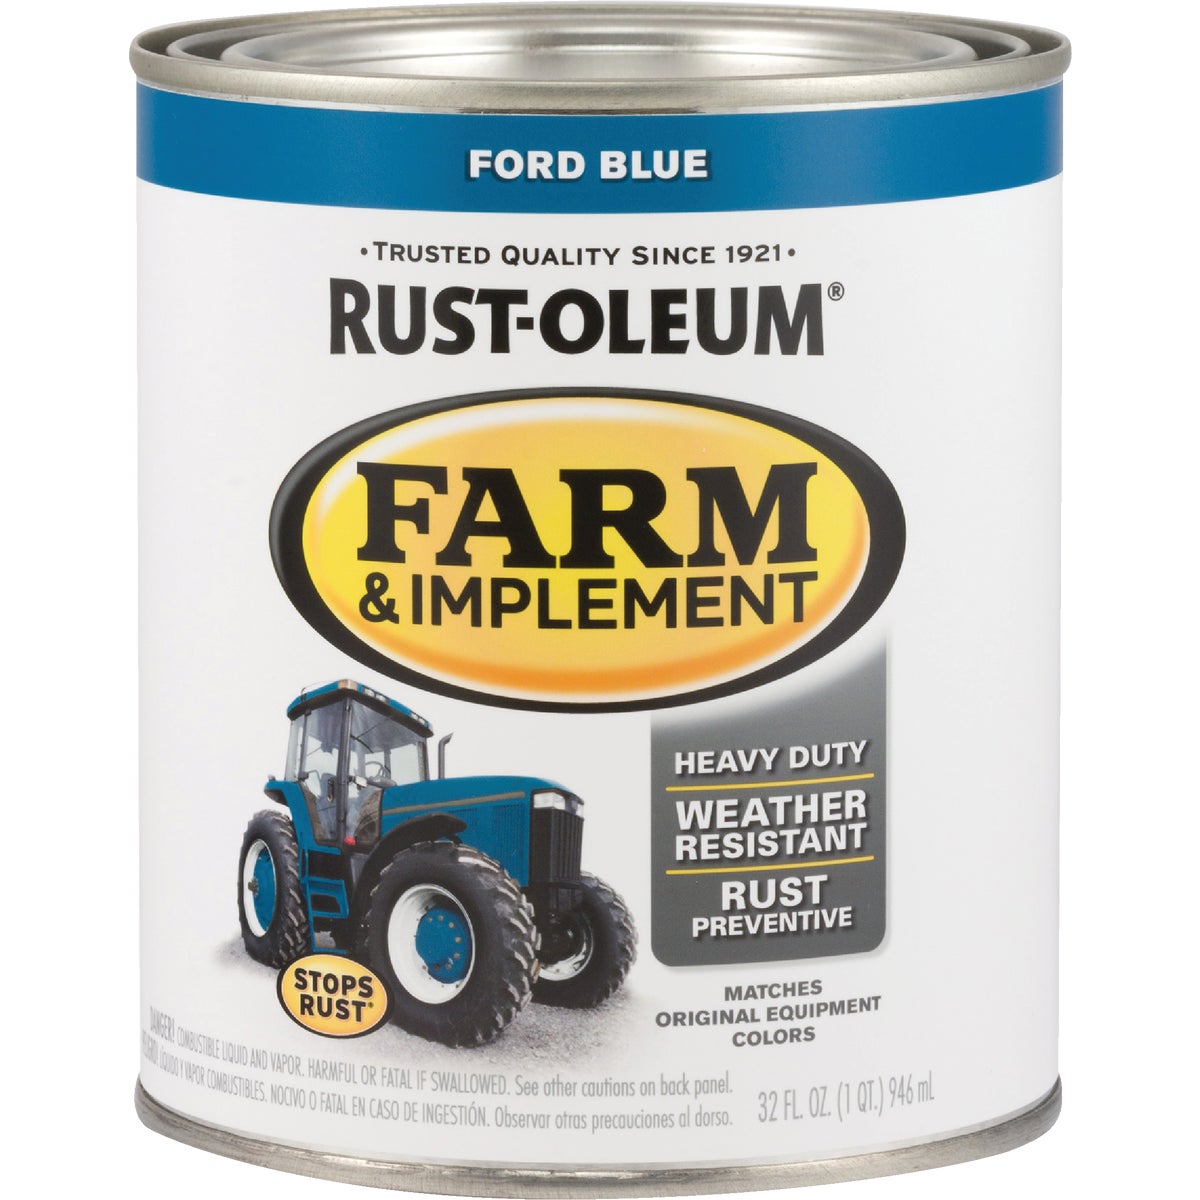 Rust-Oleum 1 Quart Ford Blue Gloss Farm & Implement Enamel